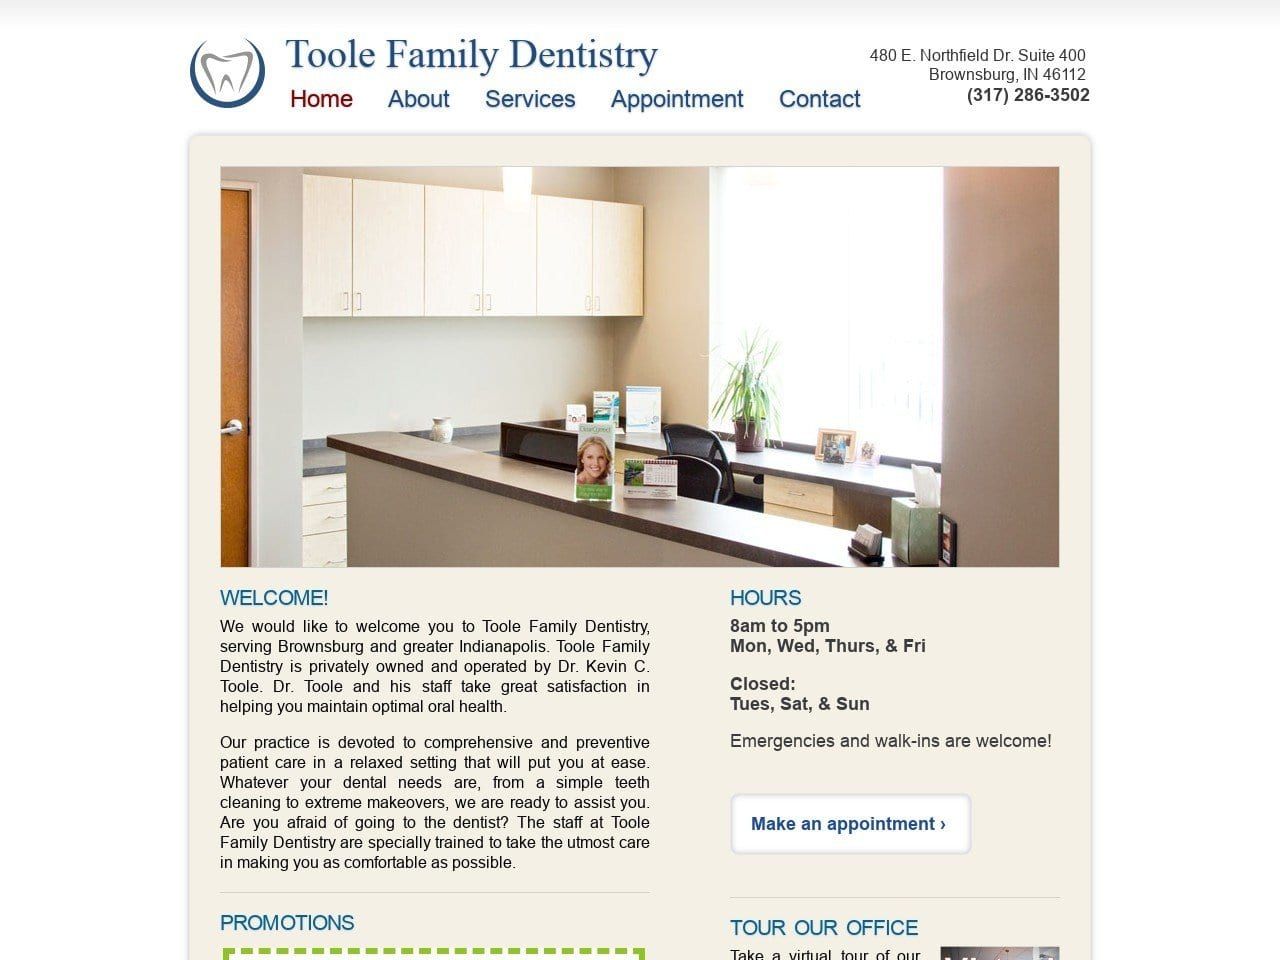 Toole Family Dentist Website Screenshot from toolefamilydentistry.com